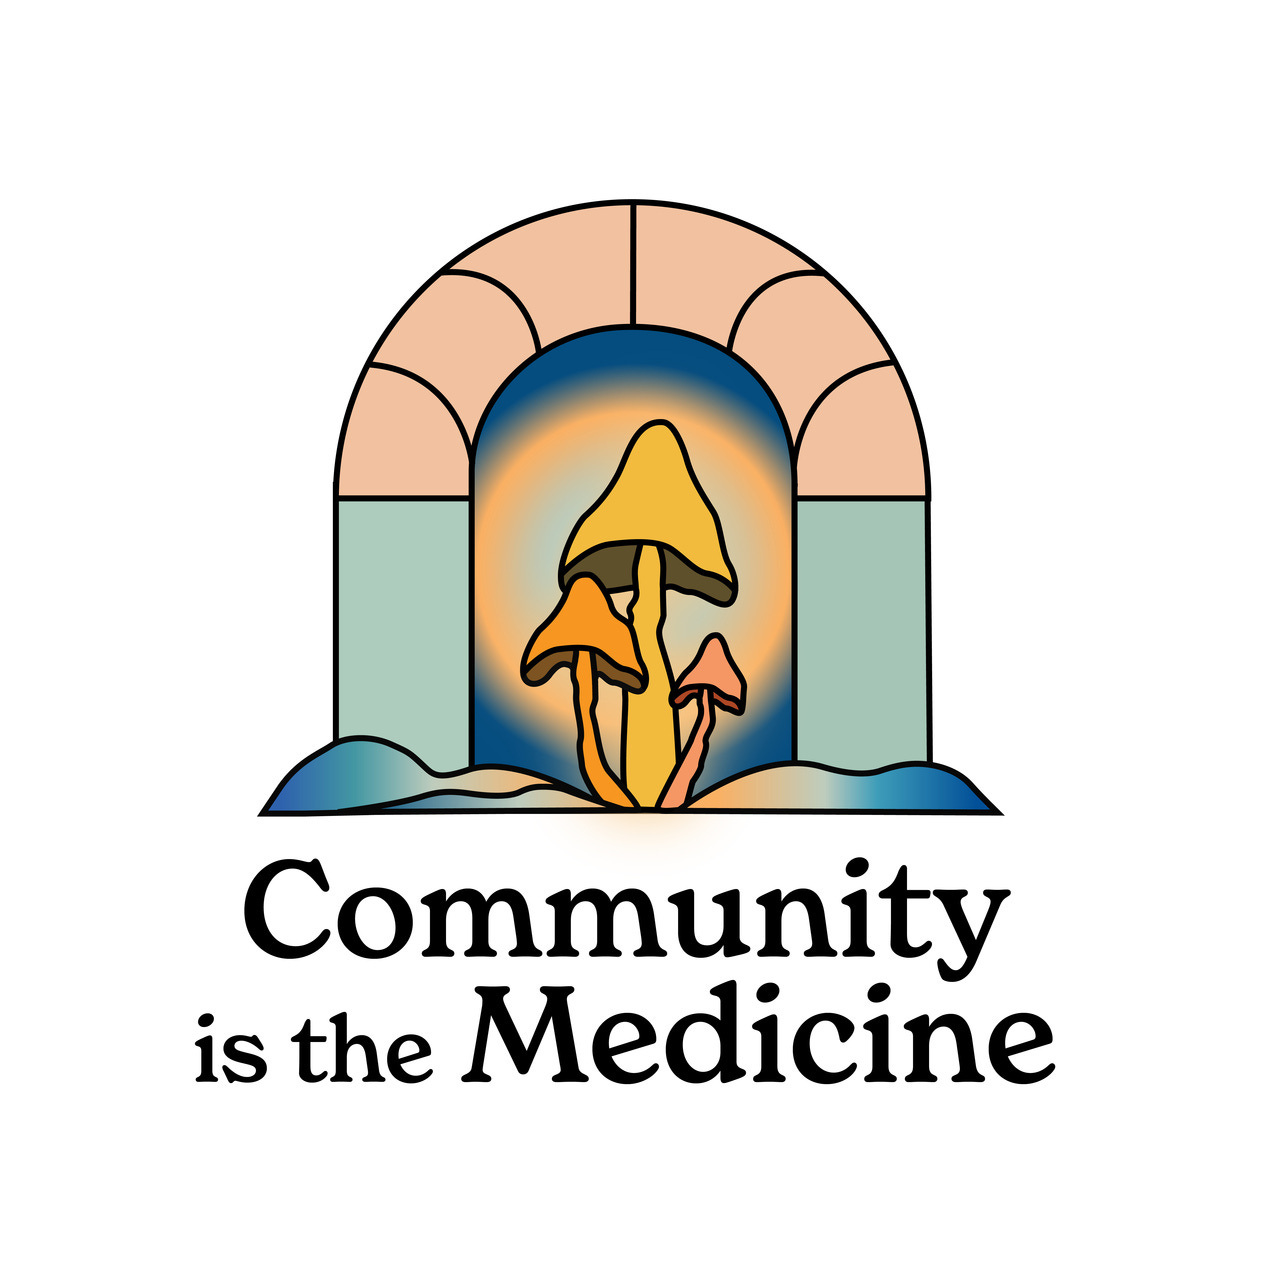 Community is the Medicine